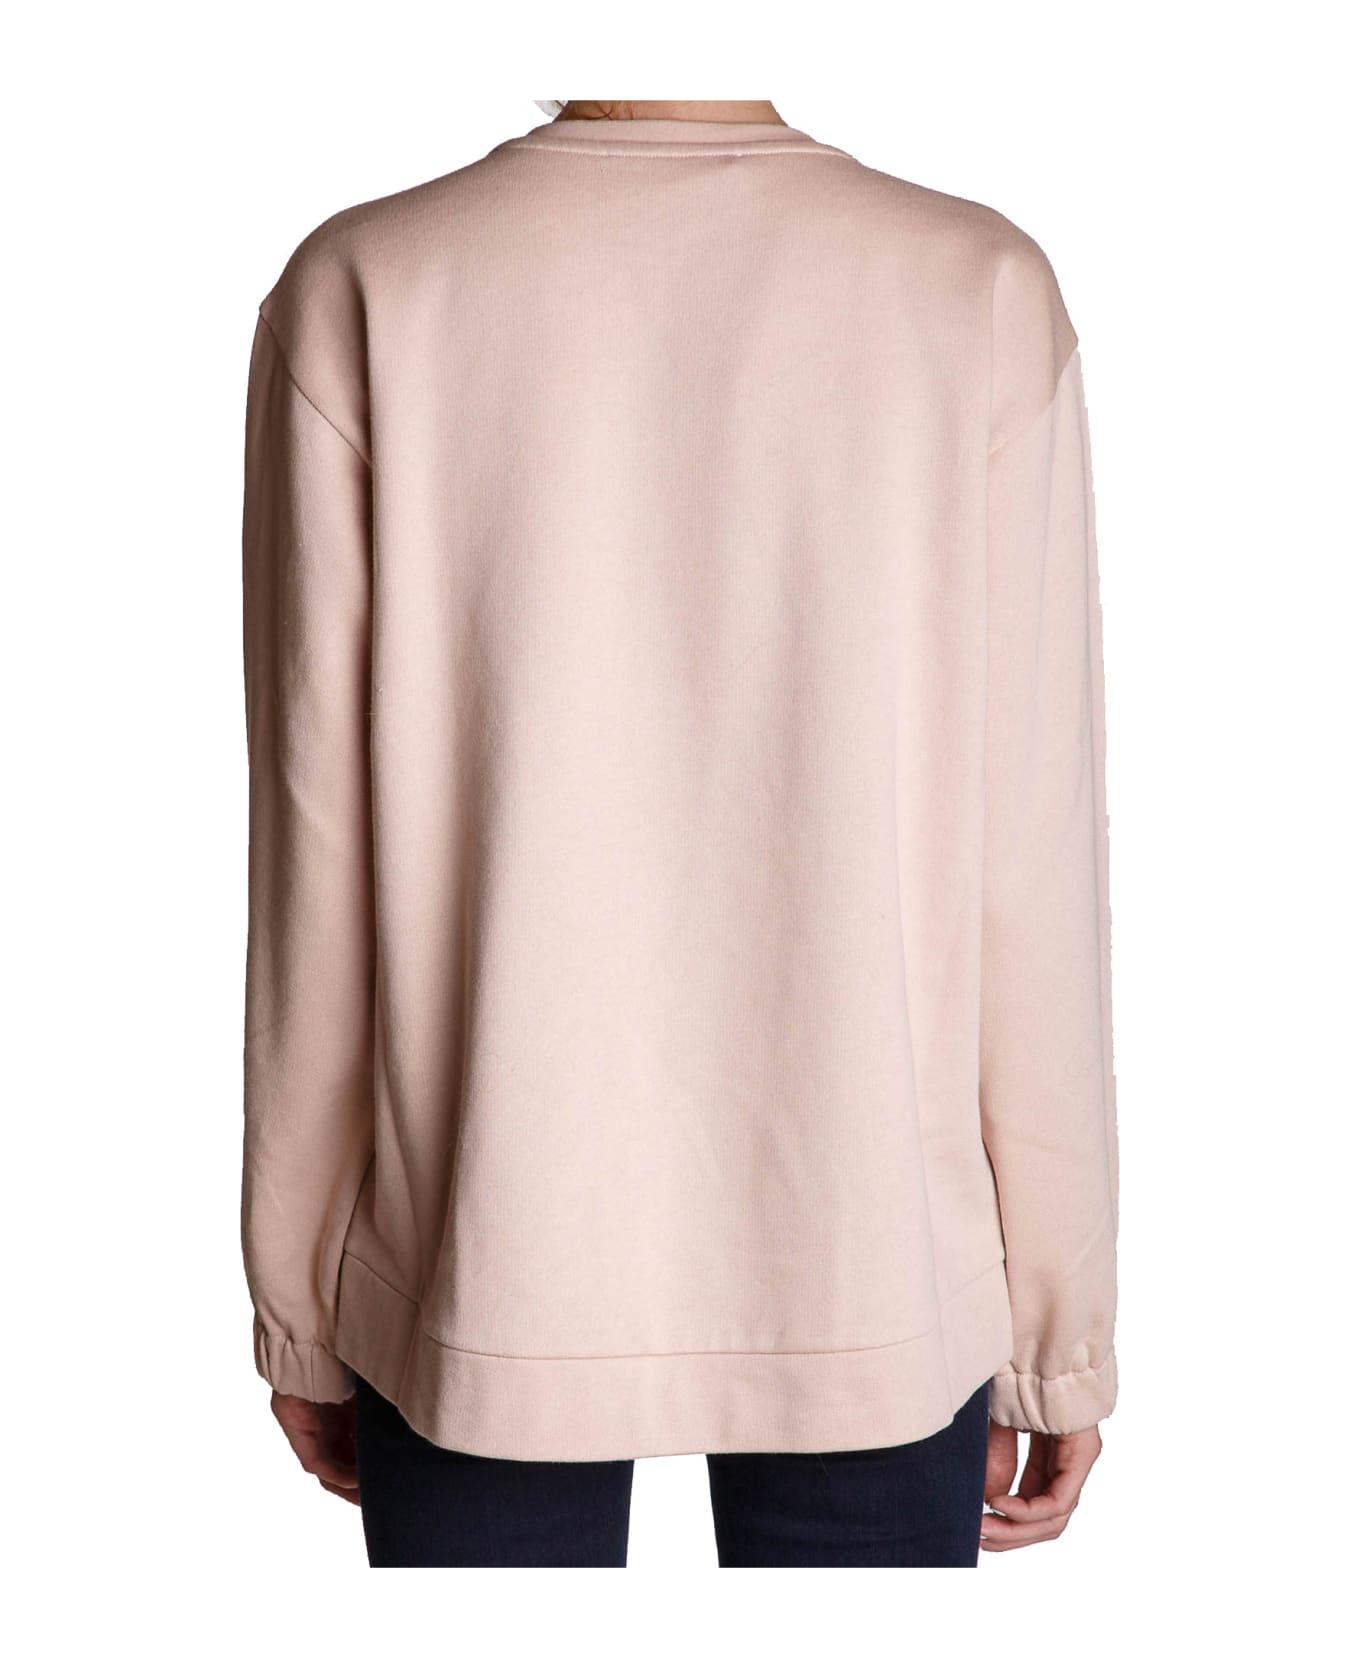 Stella McCartney Cotton Sweatshirt - Pink